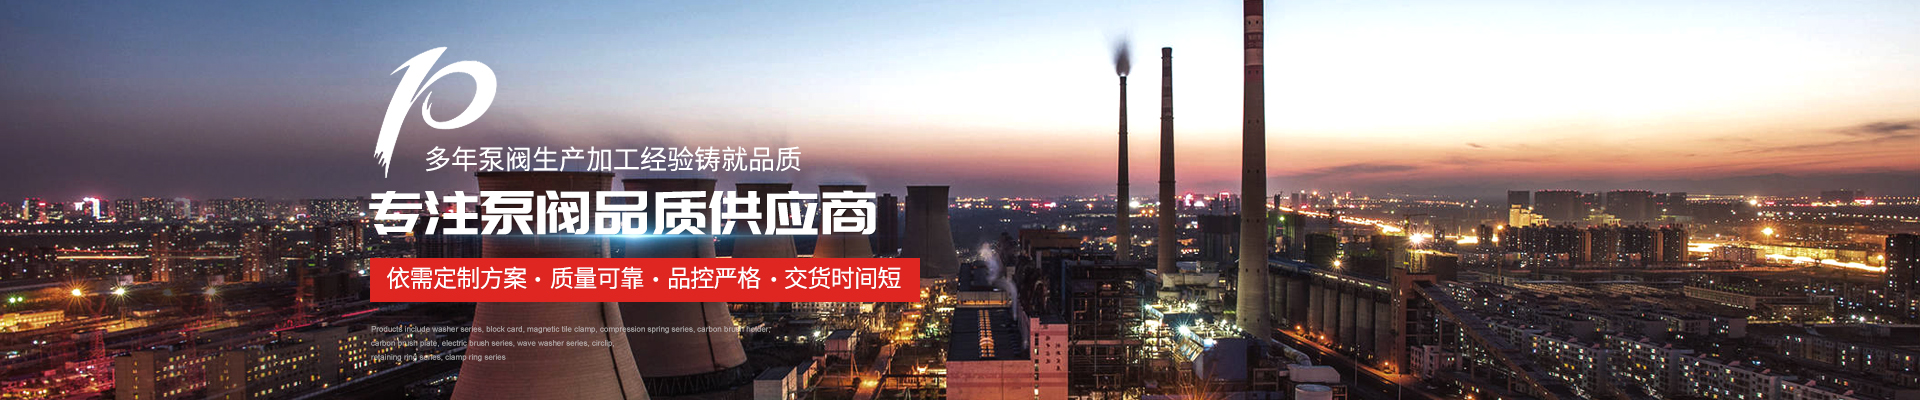 3CF消防柜,3CF控制柜產品案例 - 上海高適泵閥有限公司